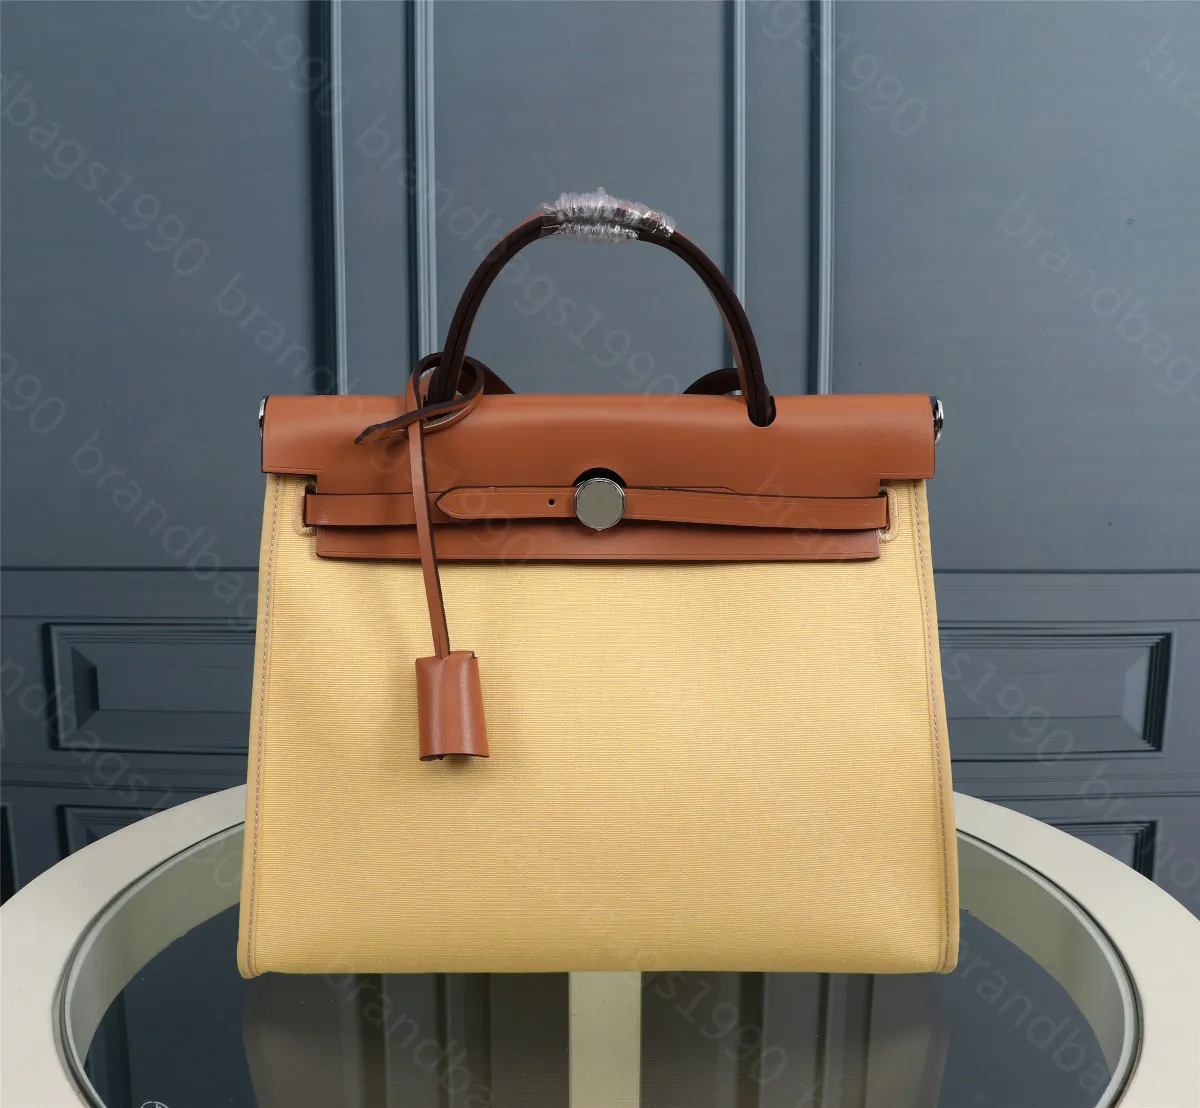 NOVA cor 31 cm bolsas femininas bolsas de moda jardim bolsa de ombro senhora couro genuíno e lona bolsa de festa atacado